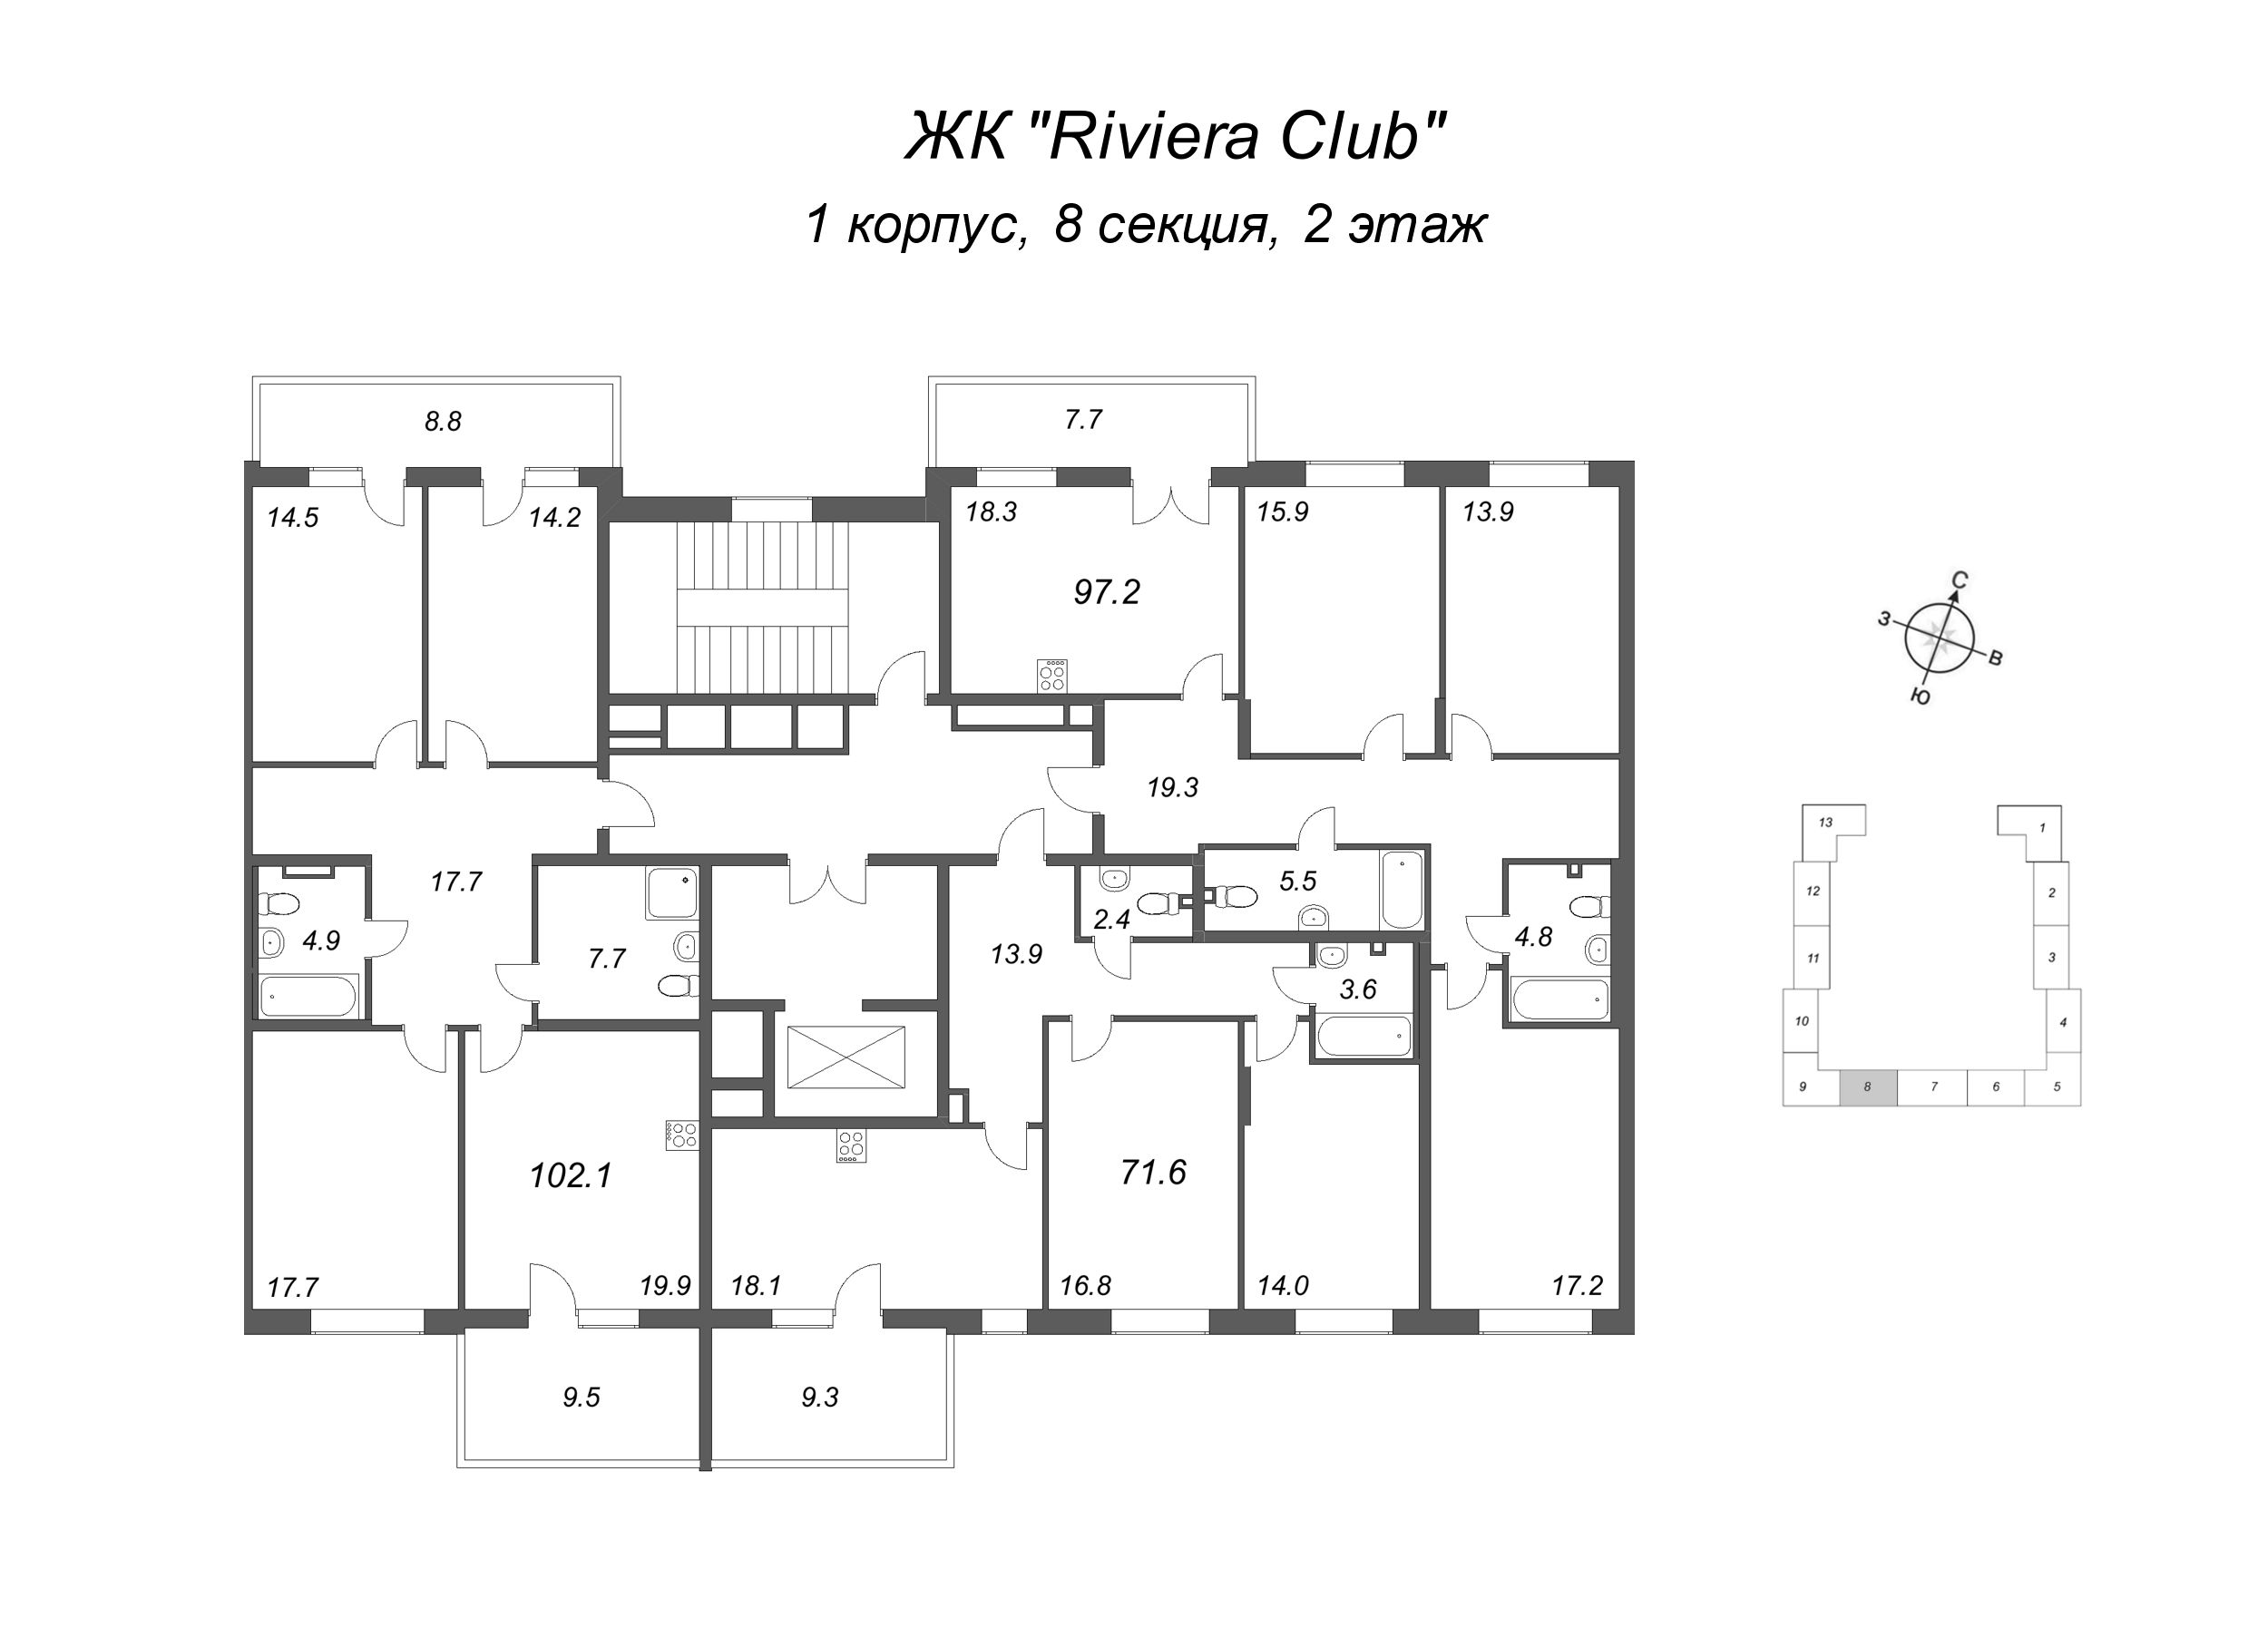 4-комнатная (Евро) квартира, 97.2 м² в ЖК "Riviera Club" - планировка этажа